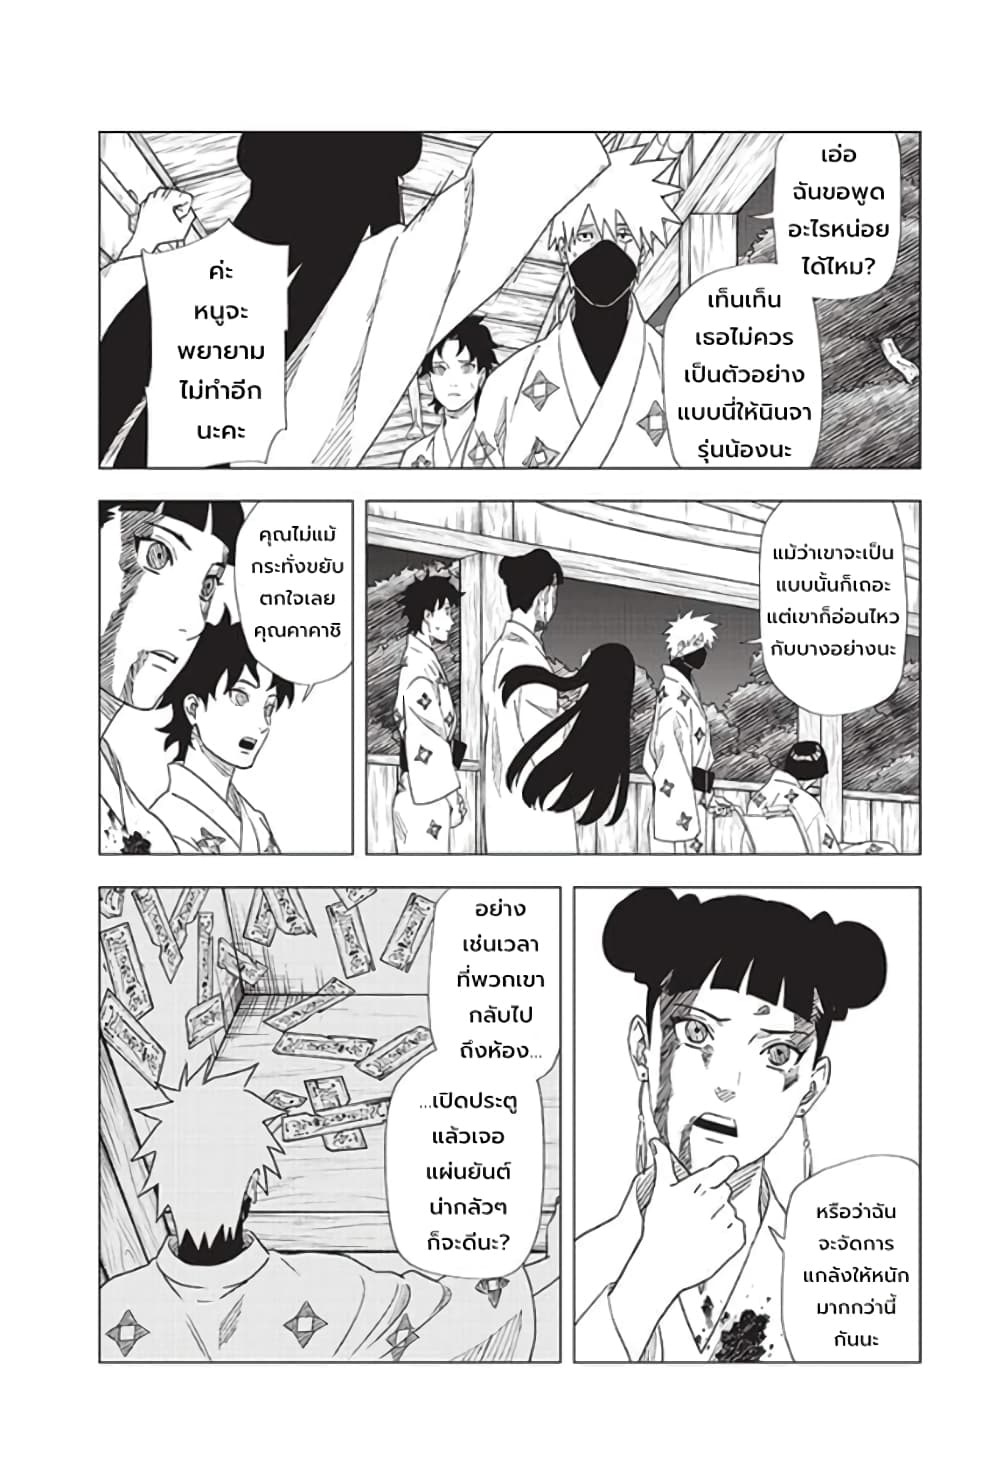 Naruto Konoha’s Story – The Steam Ninja Scrolls The Manga ตอนที่ 8 (13)